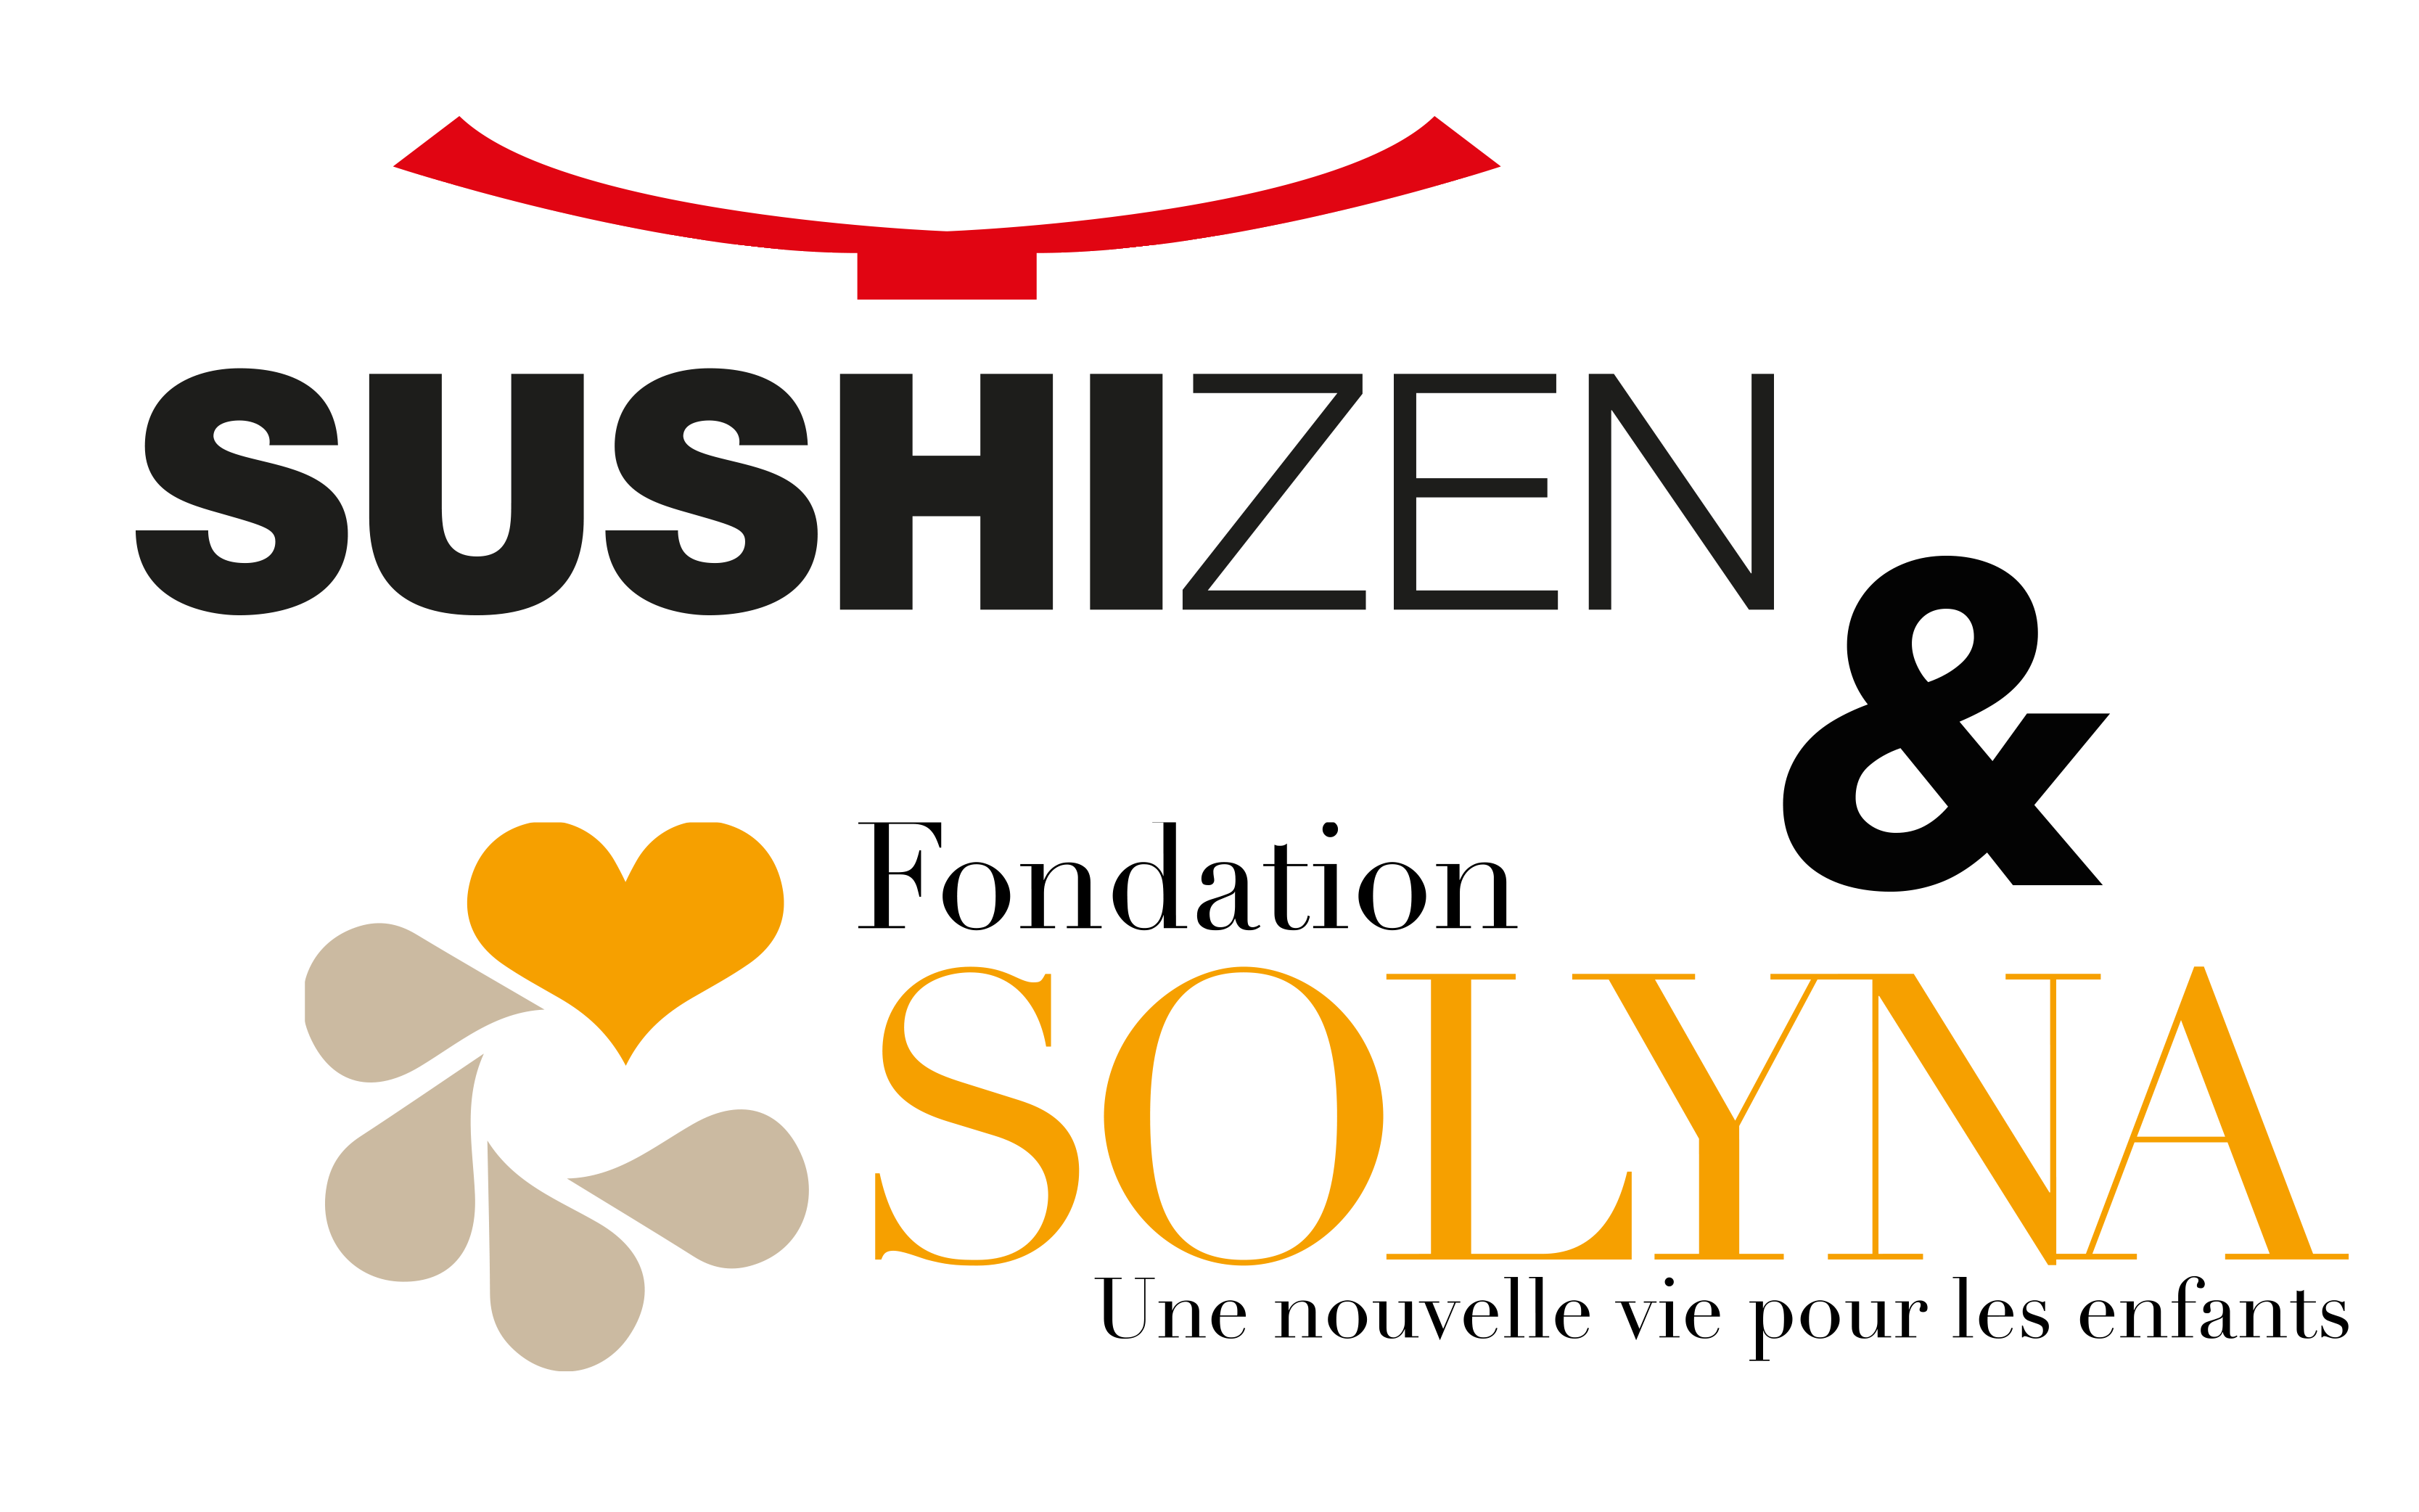 Fondation Solyna logo